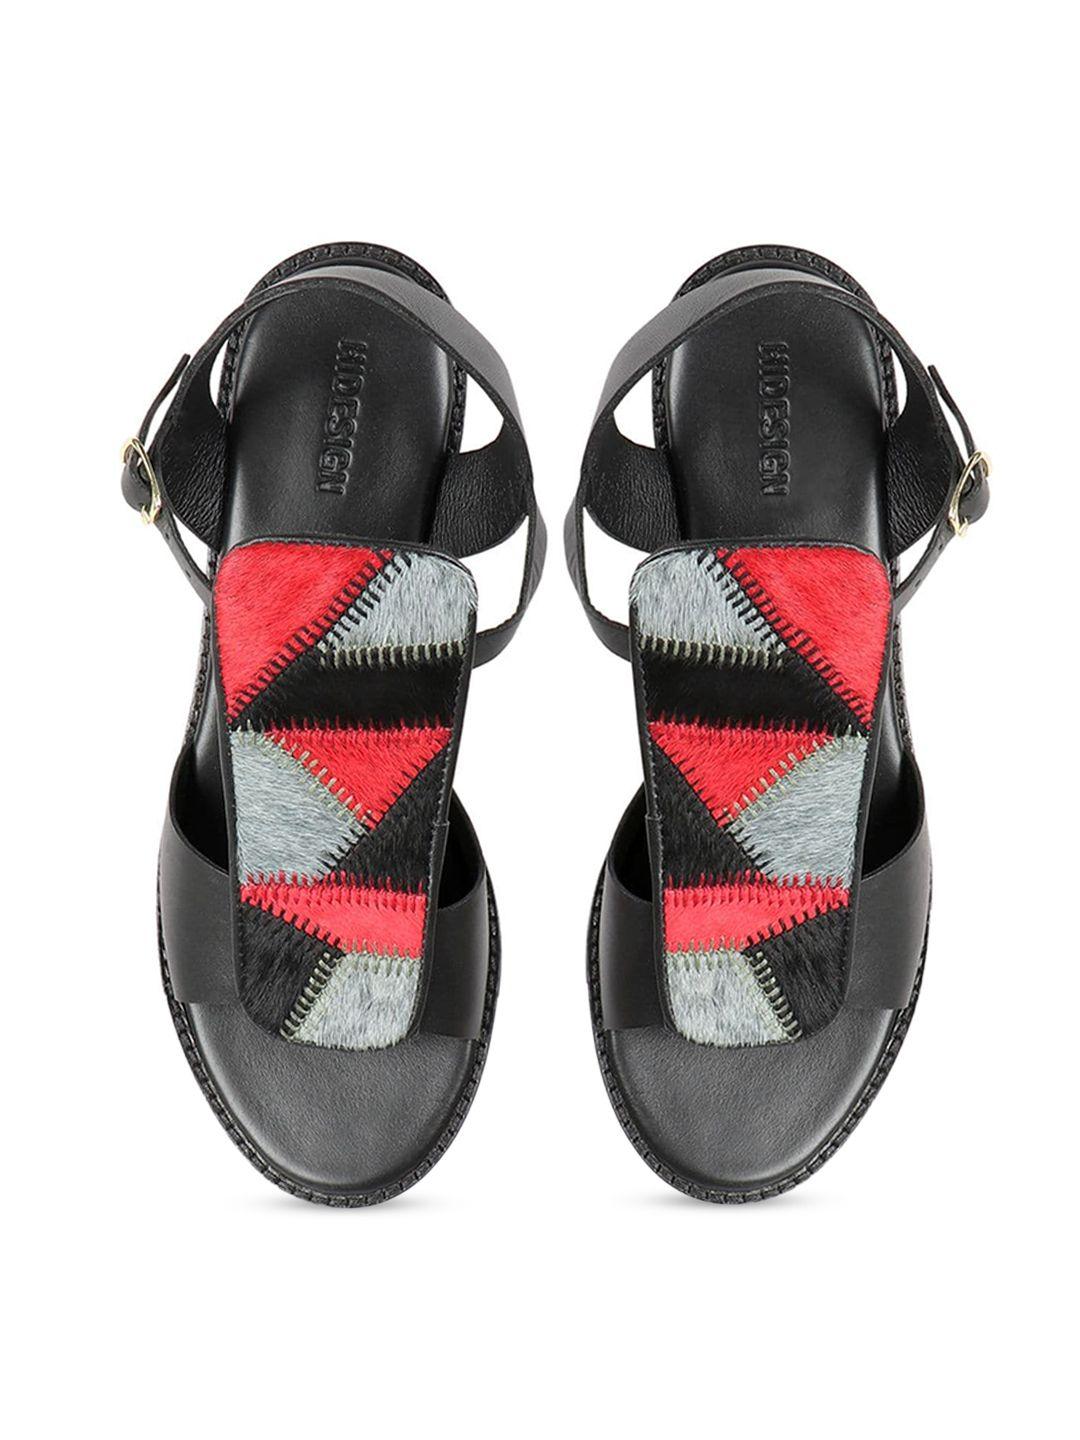 hidesign joni colourblocked leather open toe block heels with buckle closure